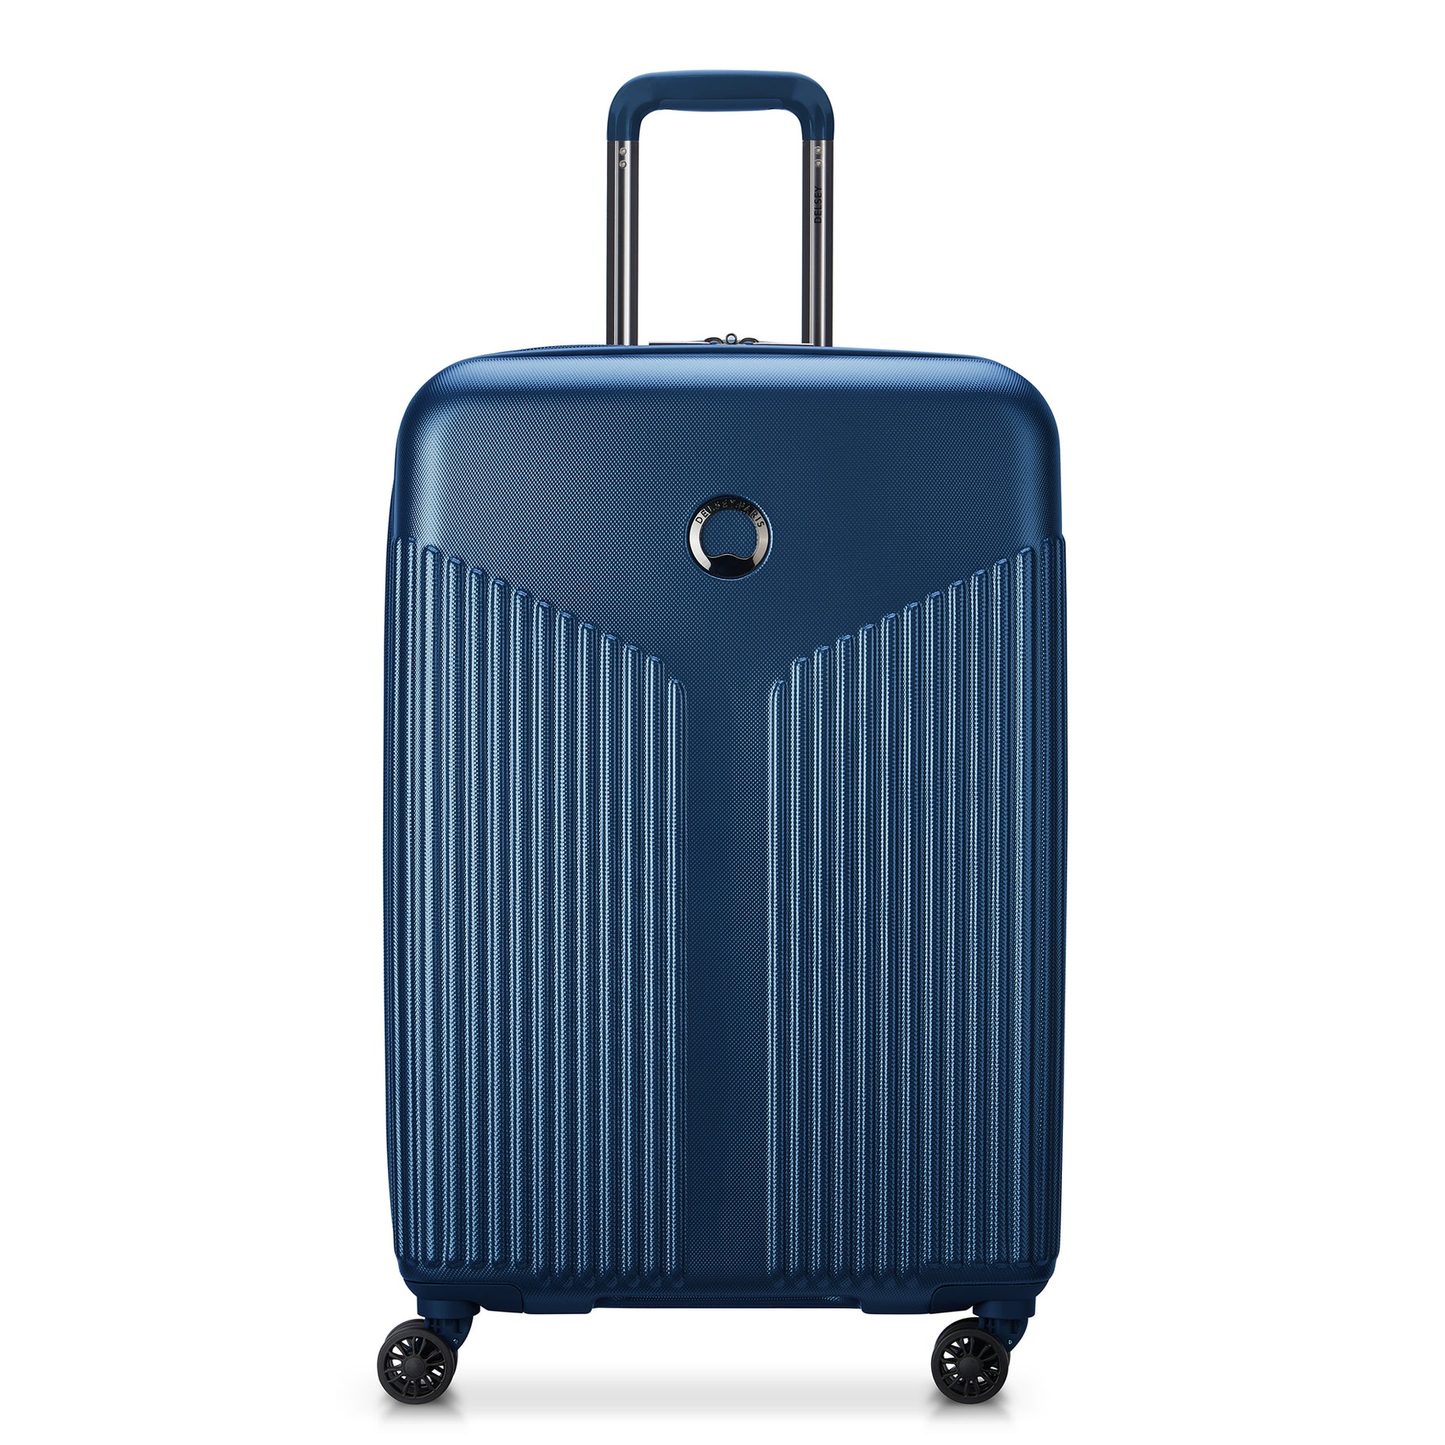 Delsey Comete 3.0 Hardcase Luggage (MEDIUM)